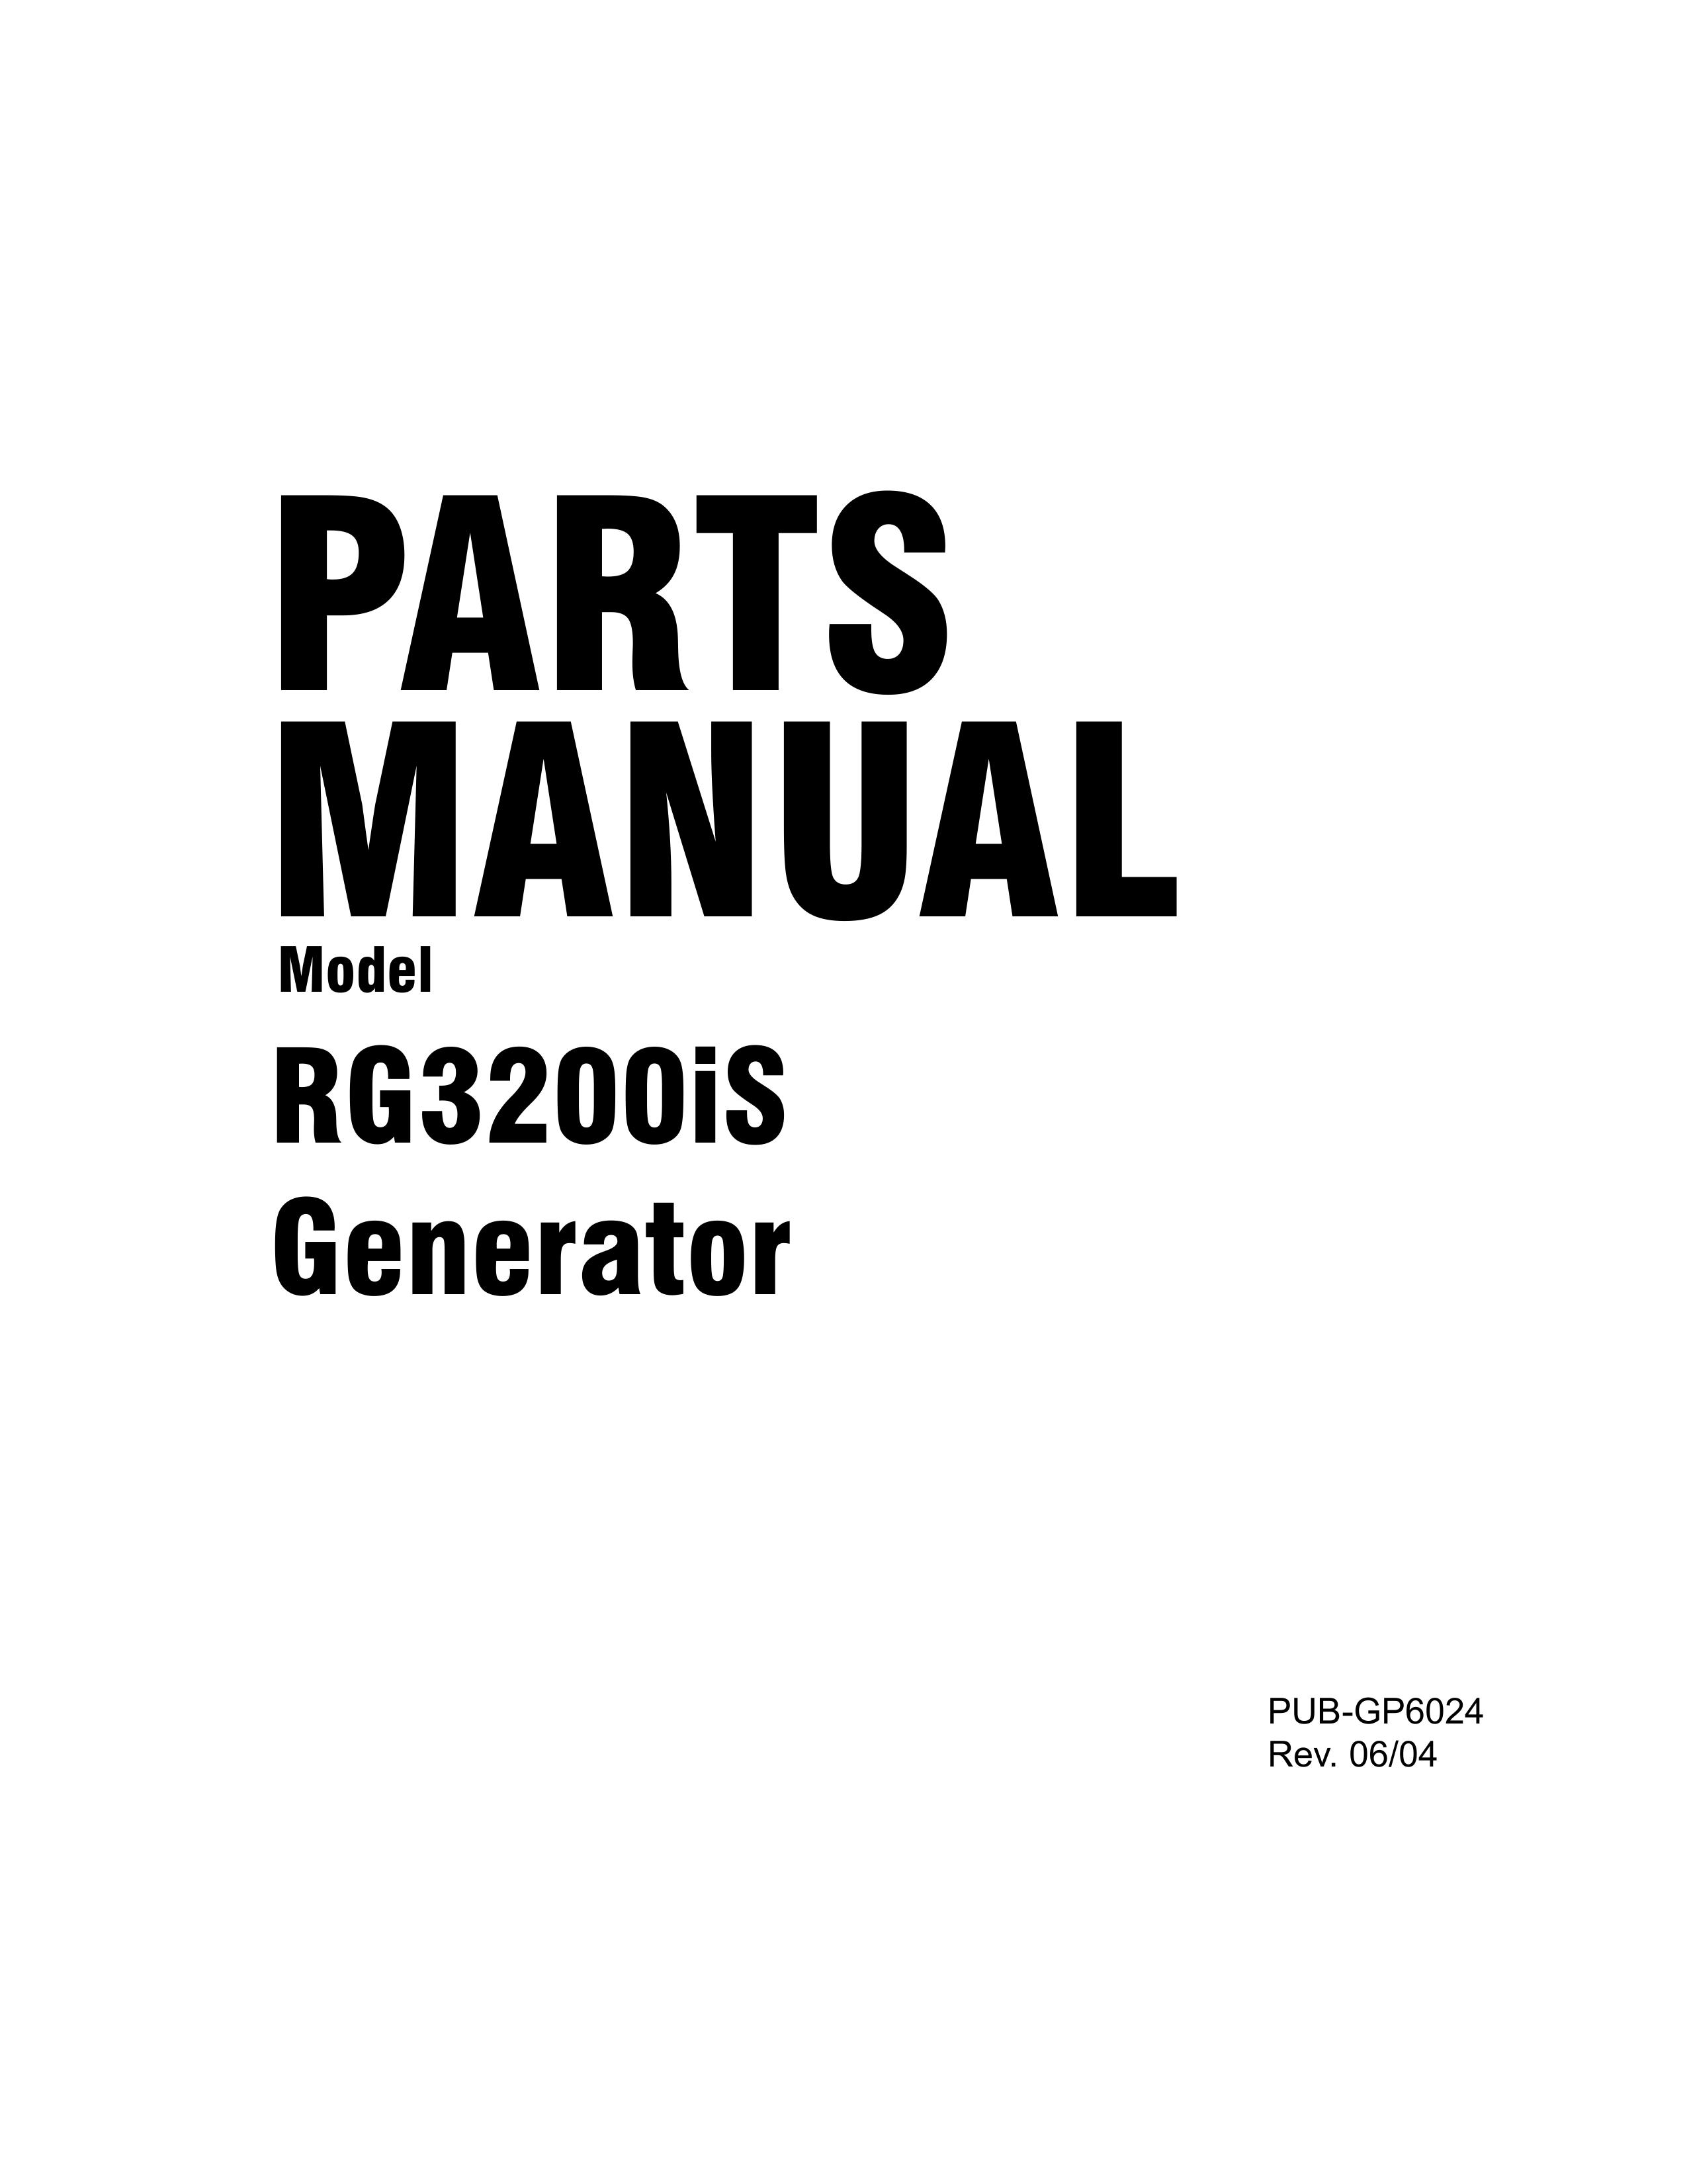 Subaru Robin Power Products RG3200iS Portable Generator User Manual